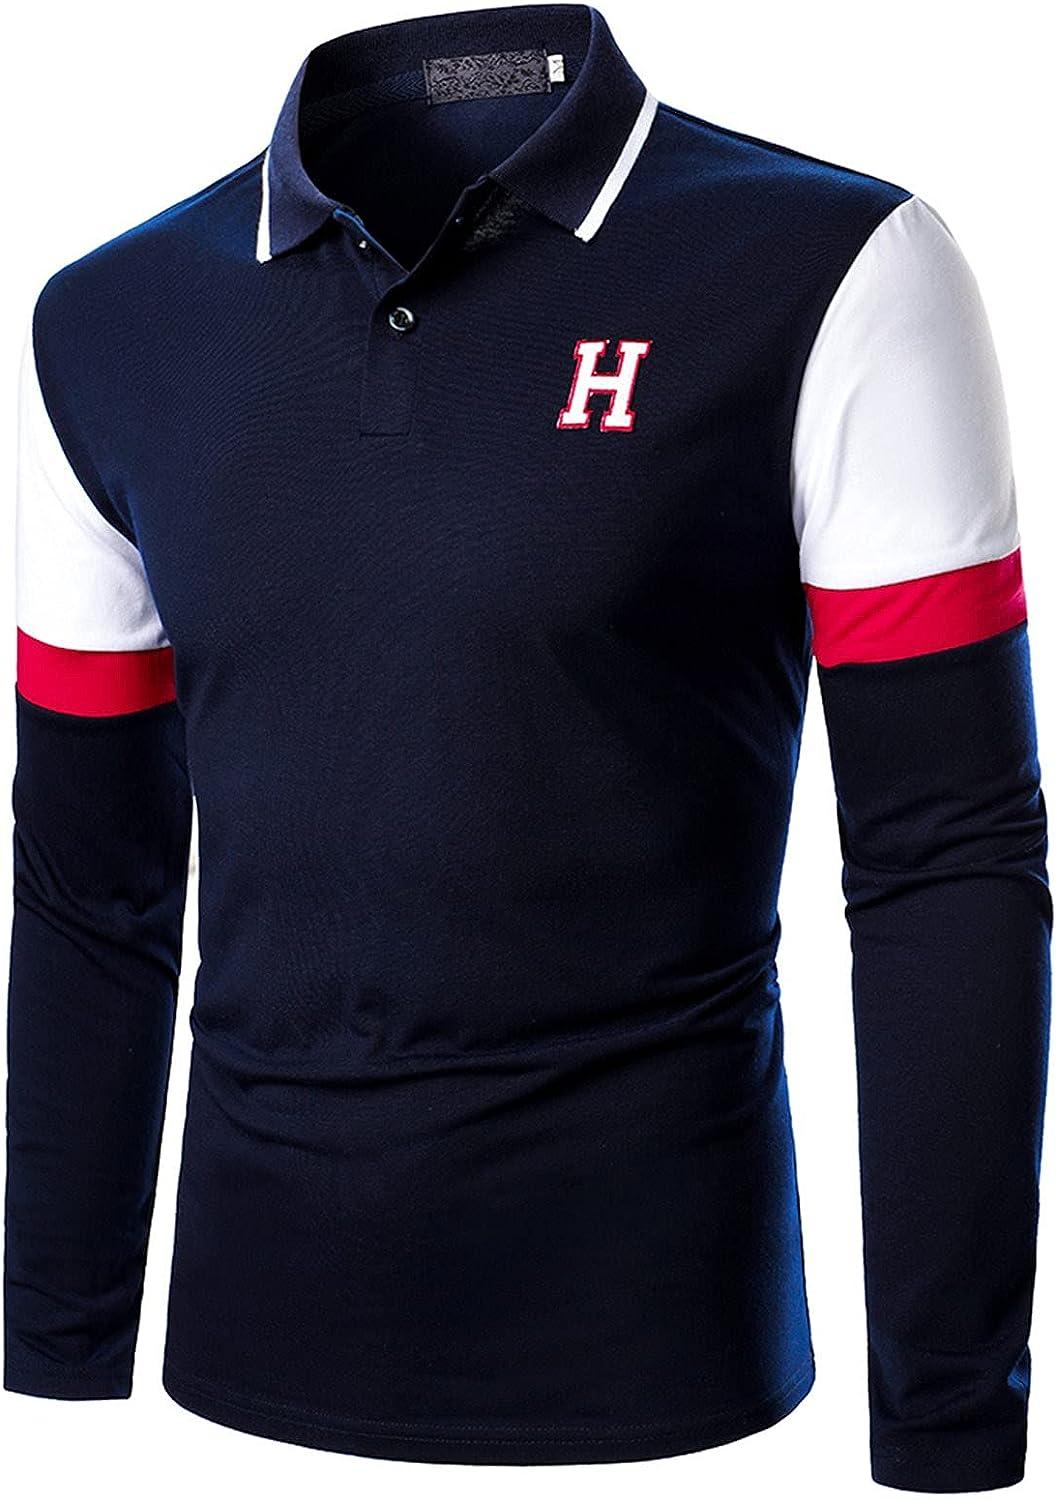 MTENG Polo Shirts for Men Long Sleeve Striped Cotton Shirts Casual